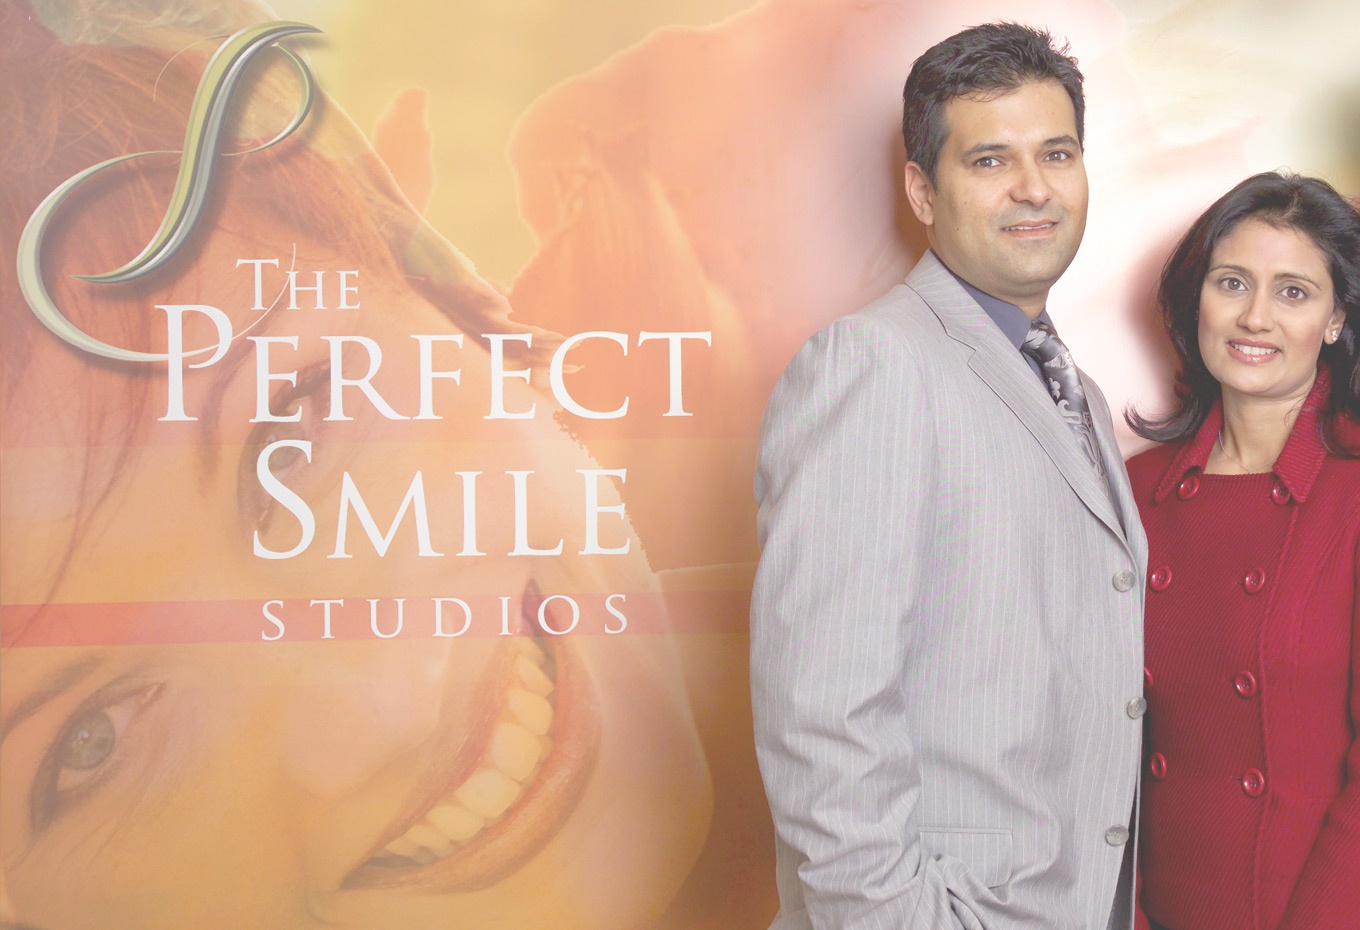 The Perfect Smile Studios